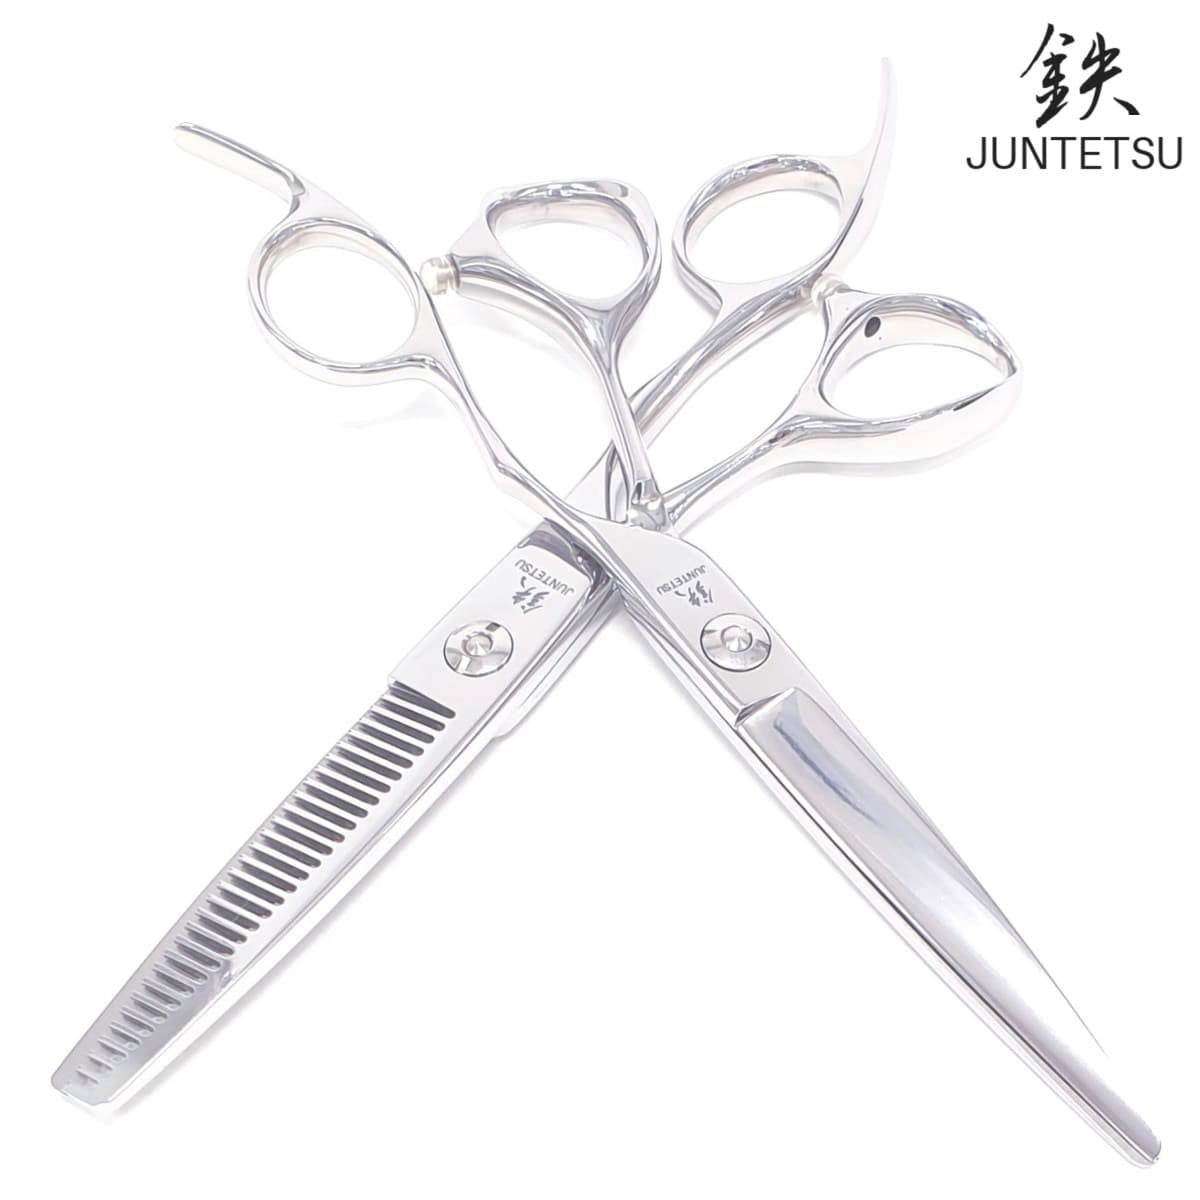 Juntetsu offset hairdressing scissor set for professionals